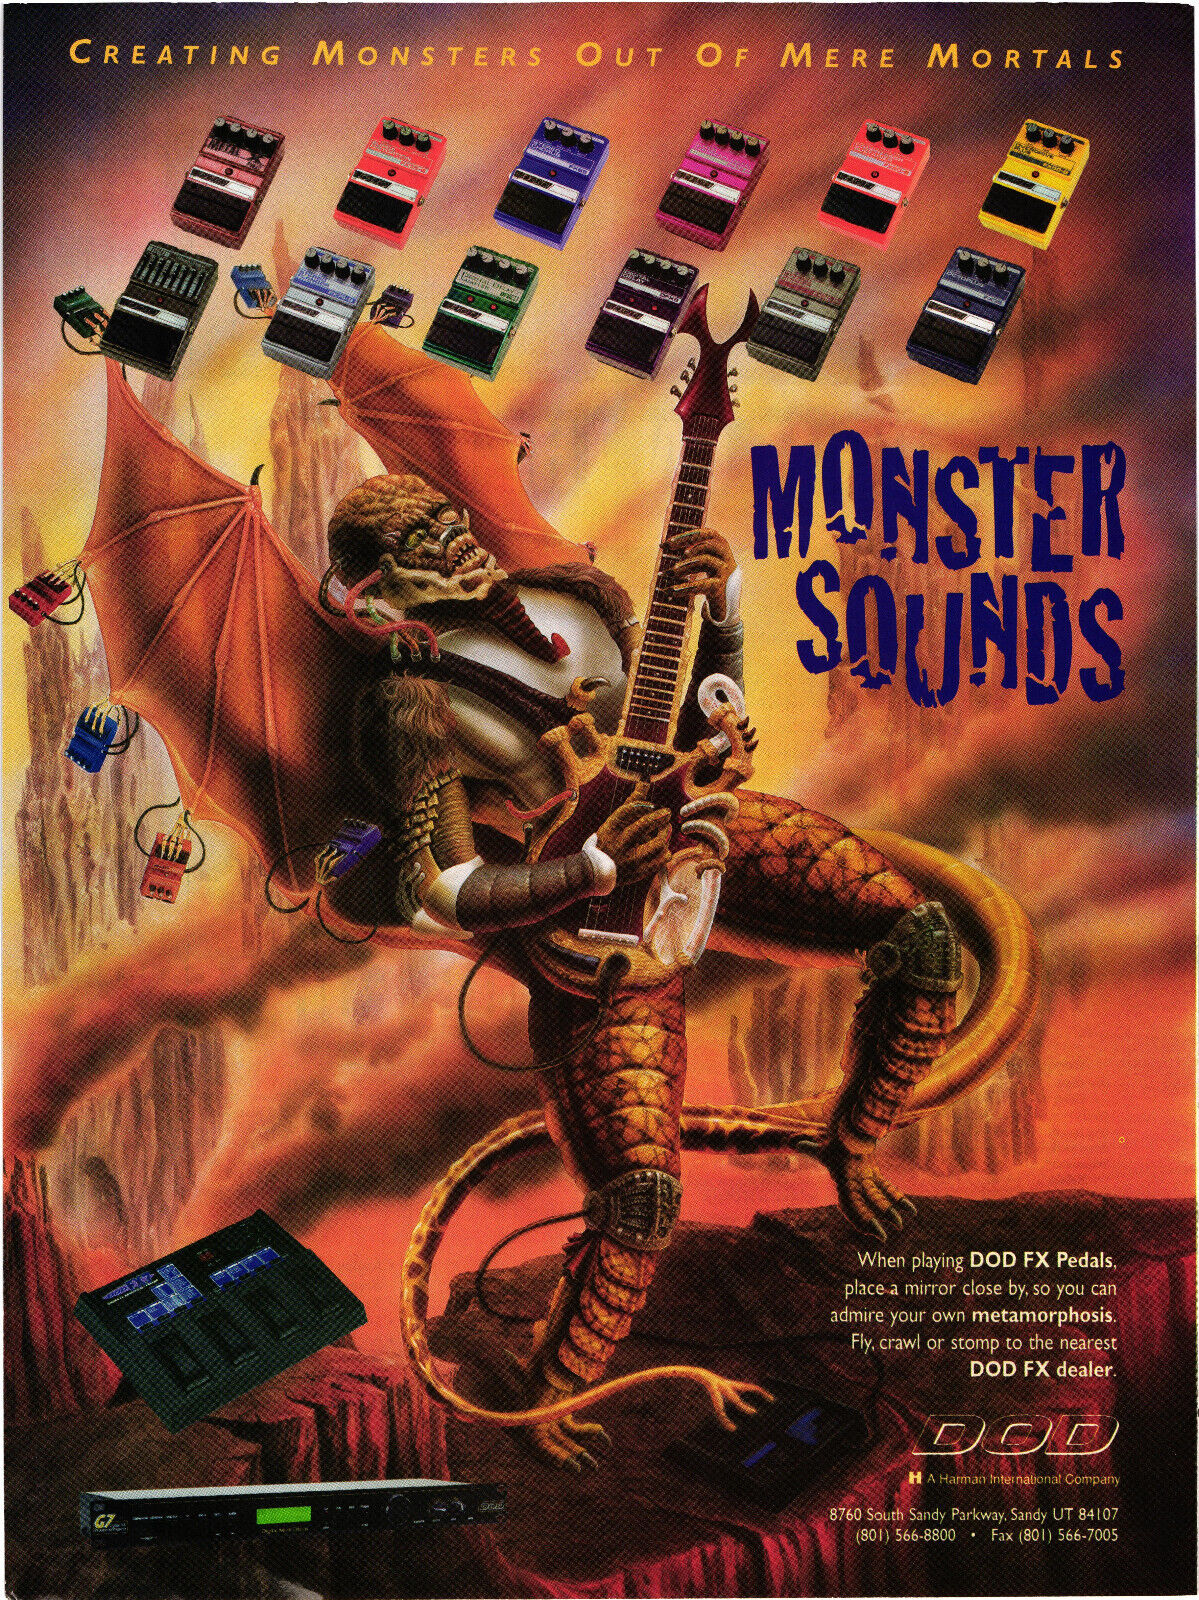 DOD FX Pedals Monster Sounds Monster Playing Guitar Advertisement